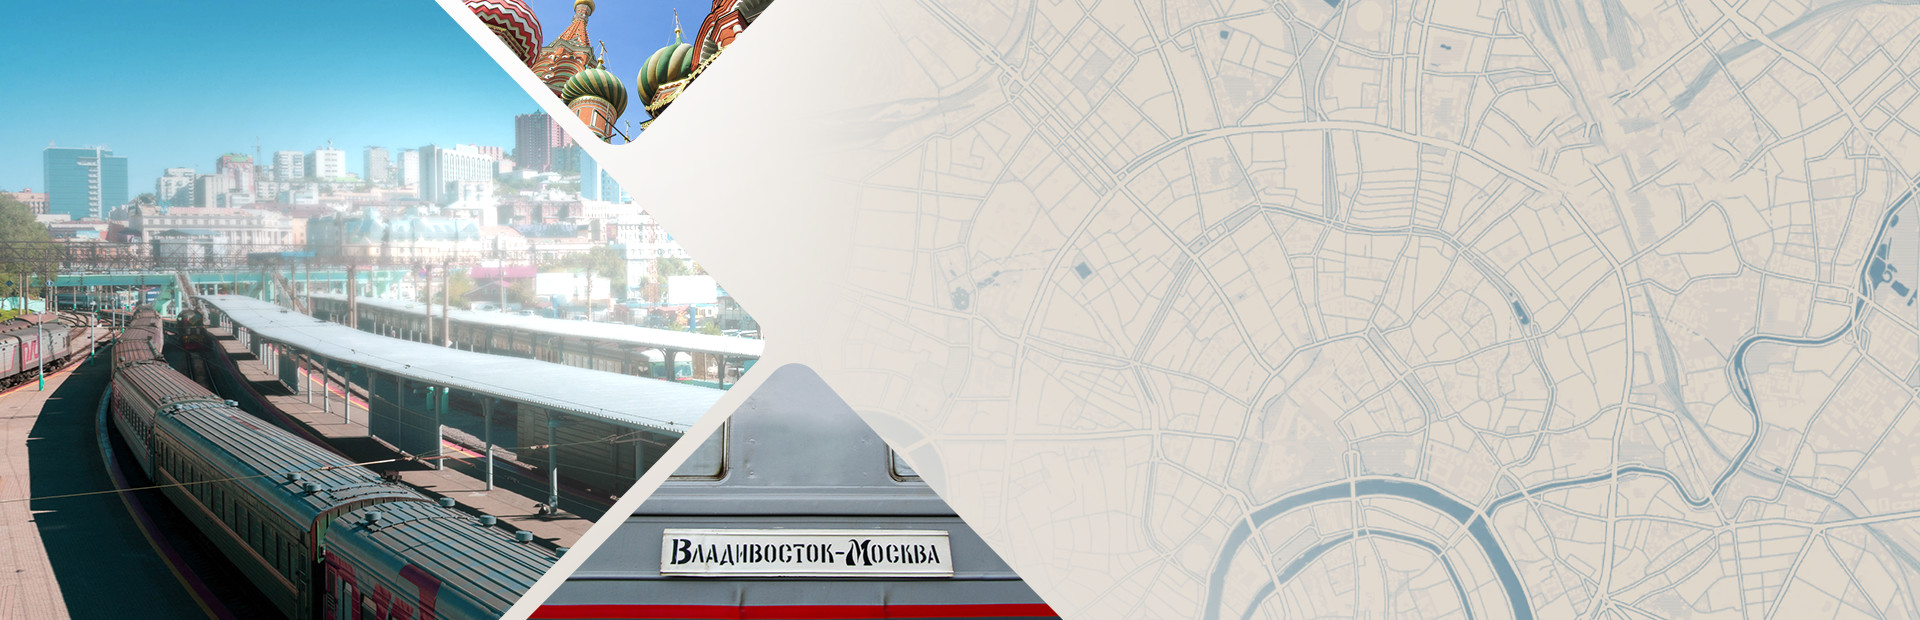 Wanderlust: Transsiberian cover image